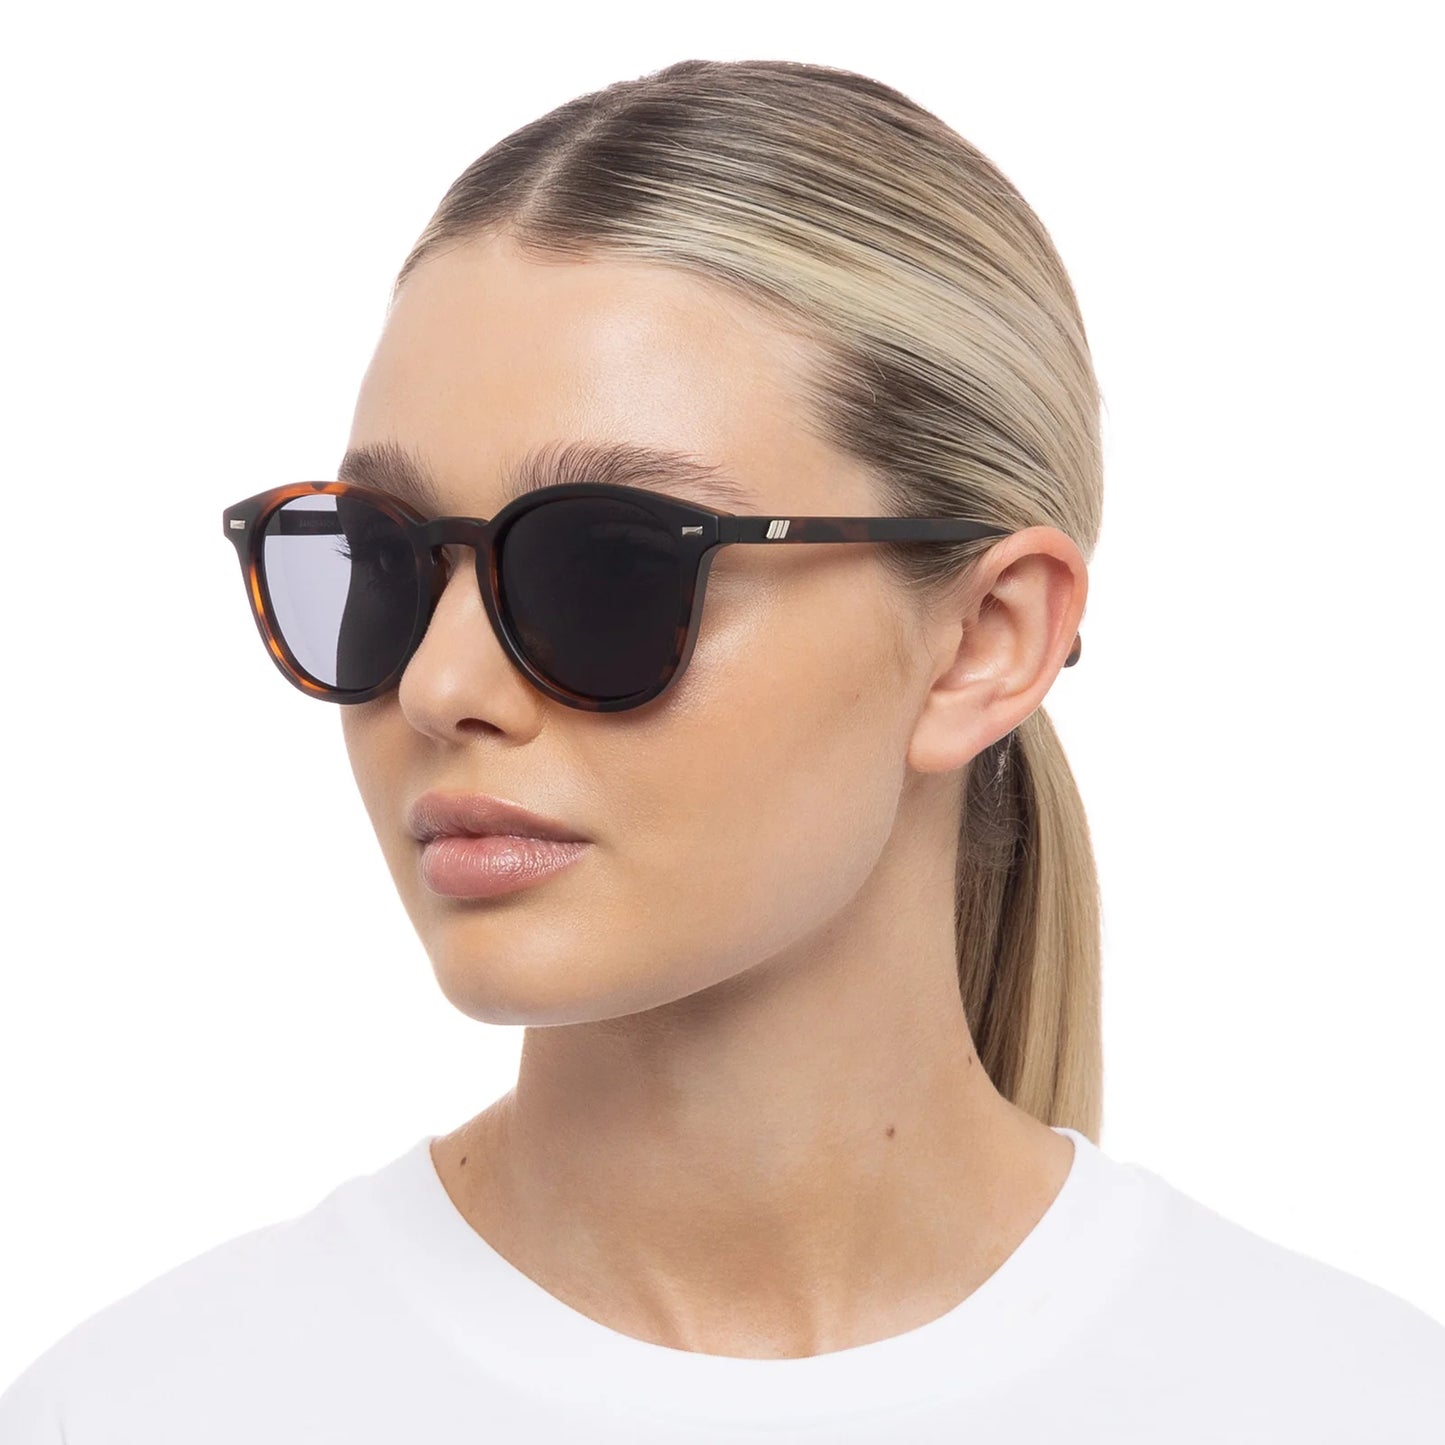 Le Specs Bandwagon Sunglasses